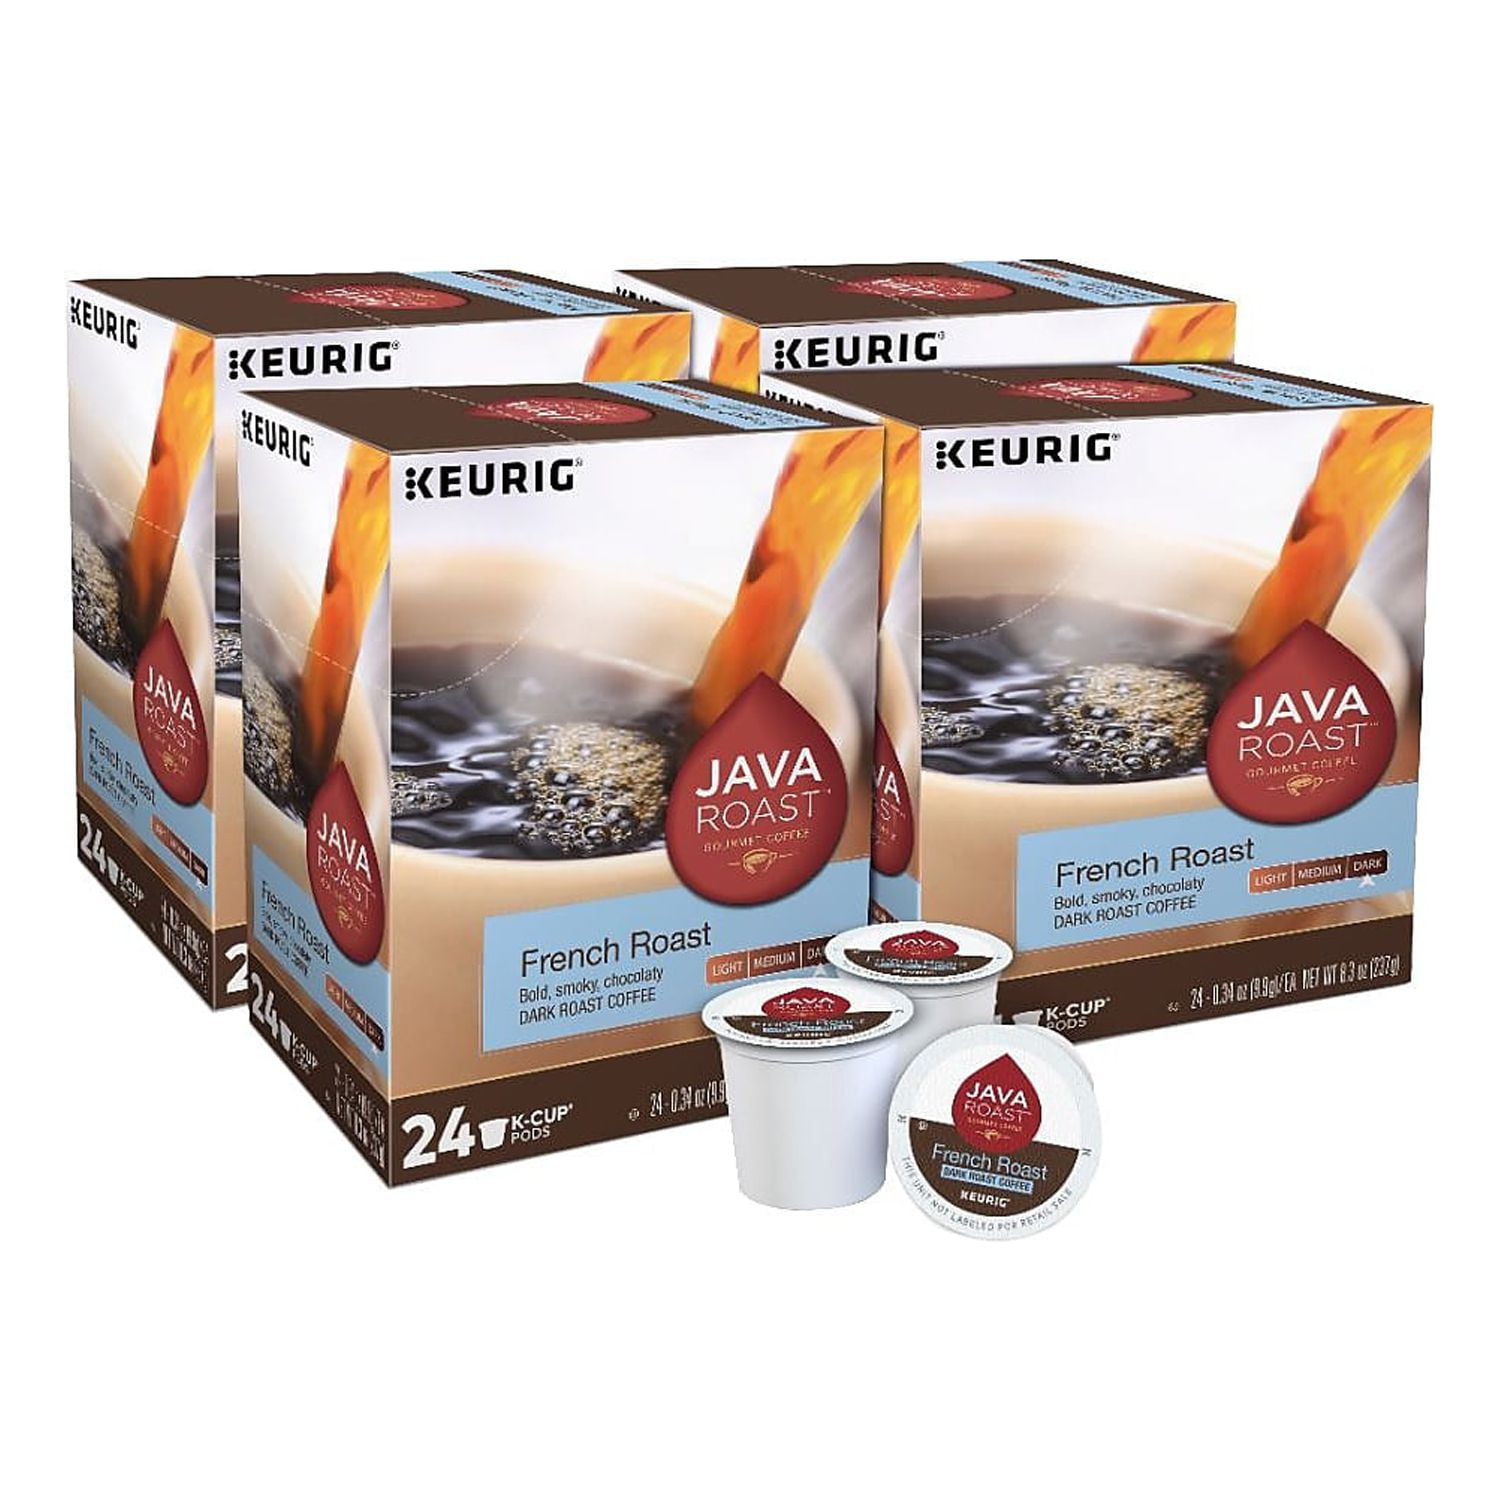 French Roast JavaOne Pod Coffee, Dark Roast Single Cup Coffee Pods